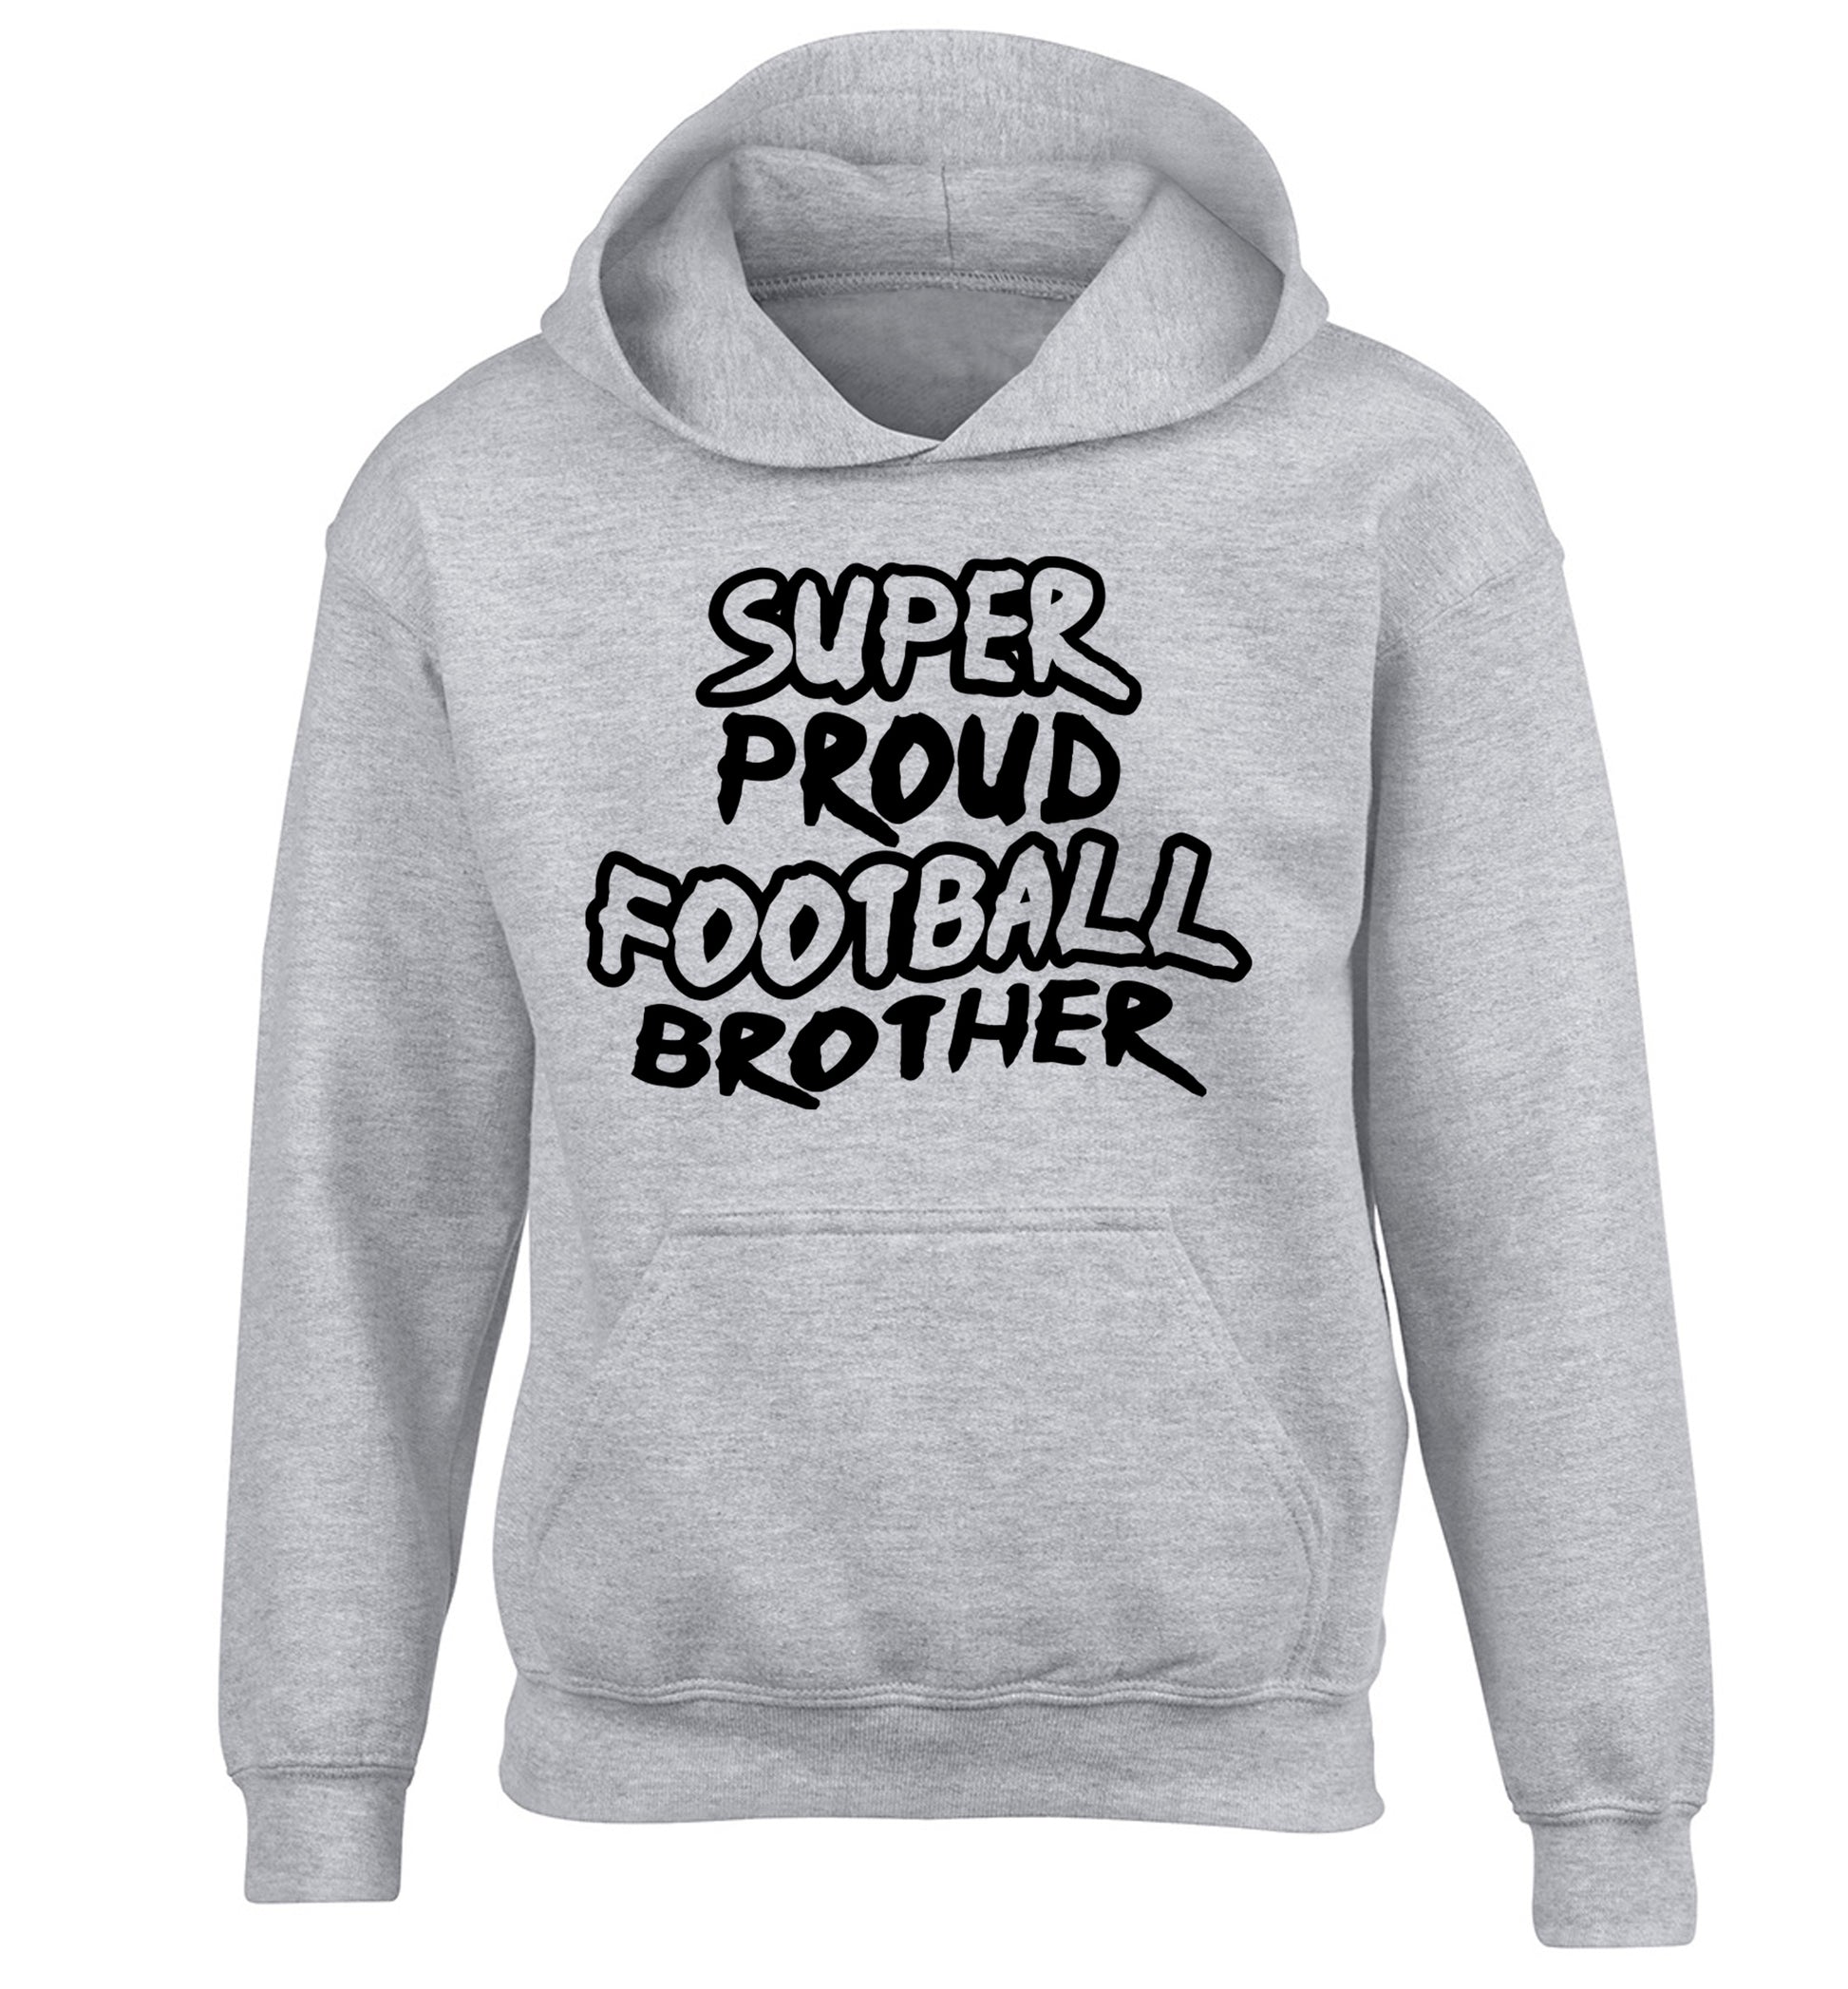 Super proud football brother children's grey hoodie 12-14 Years